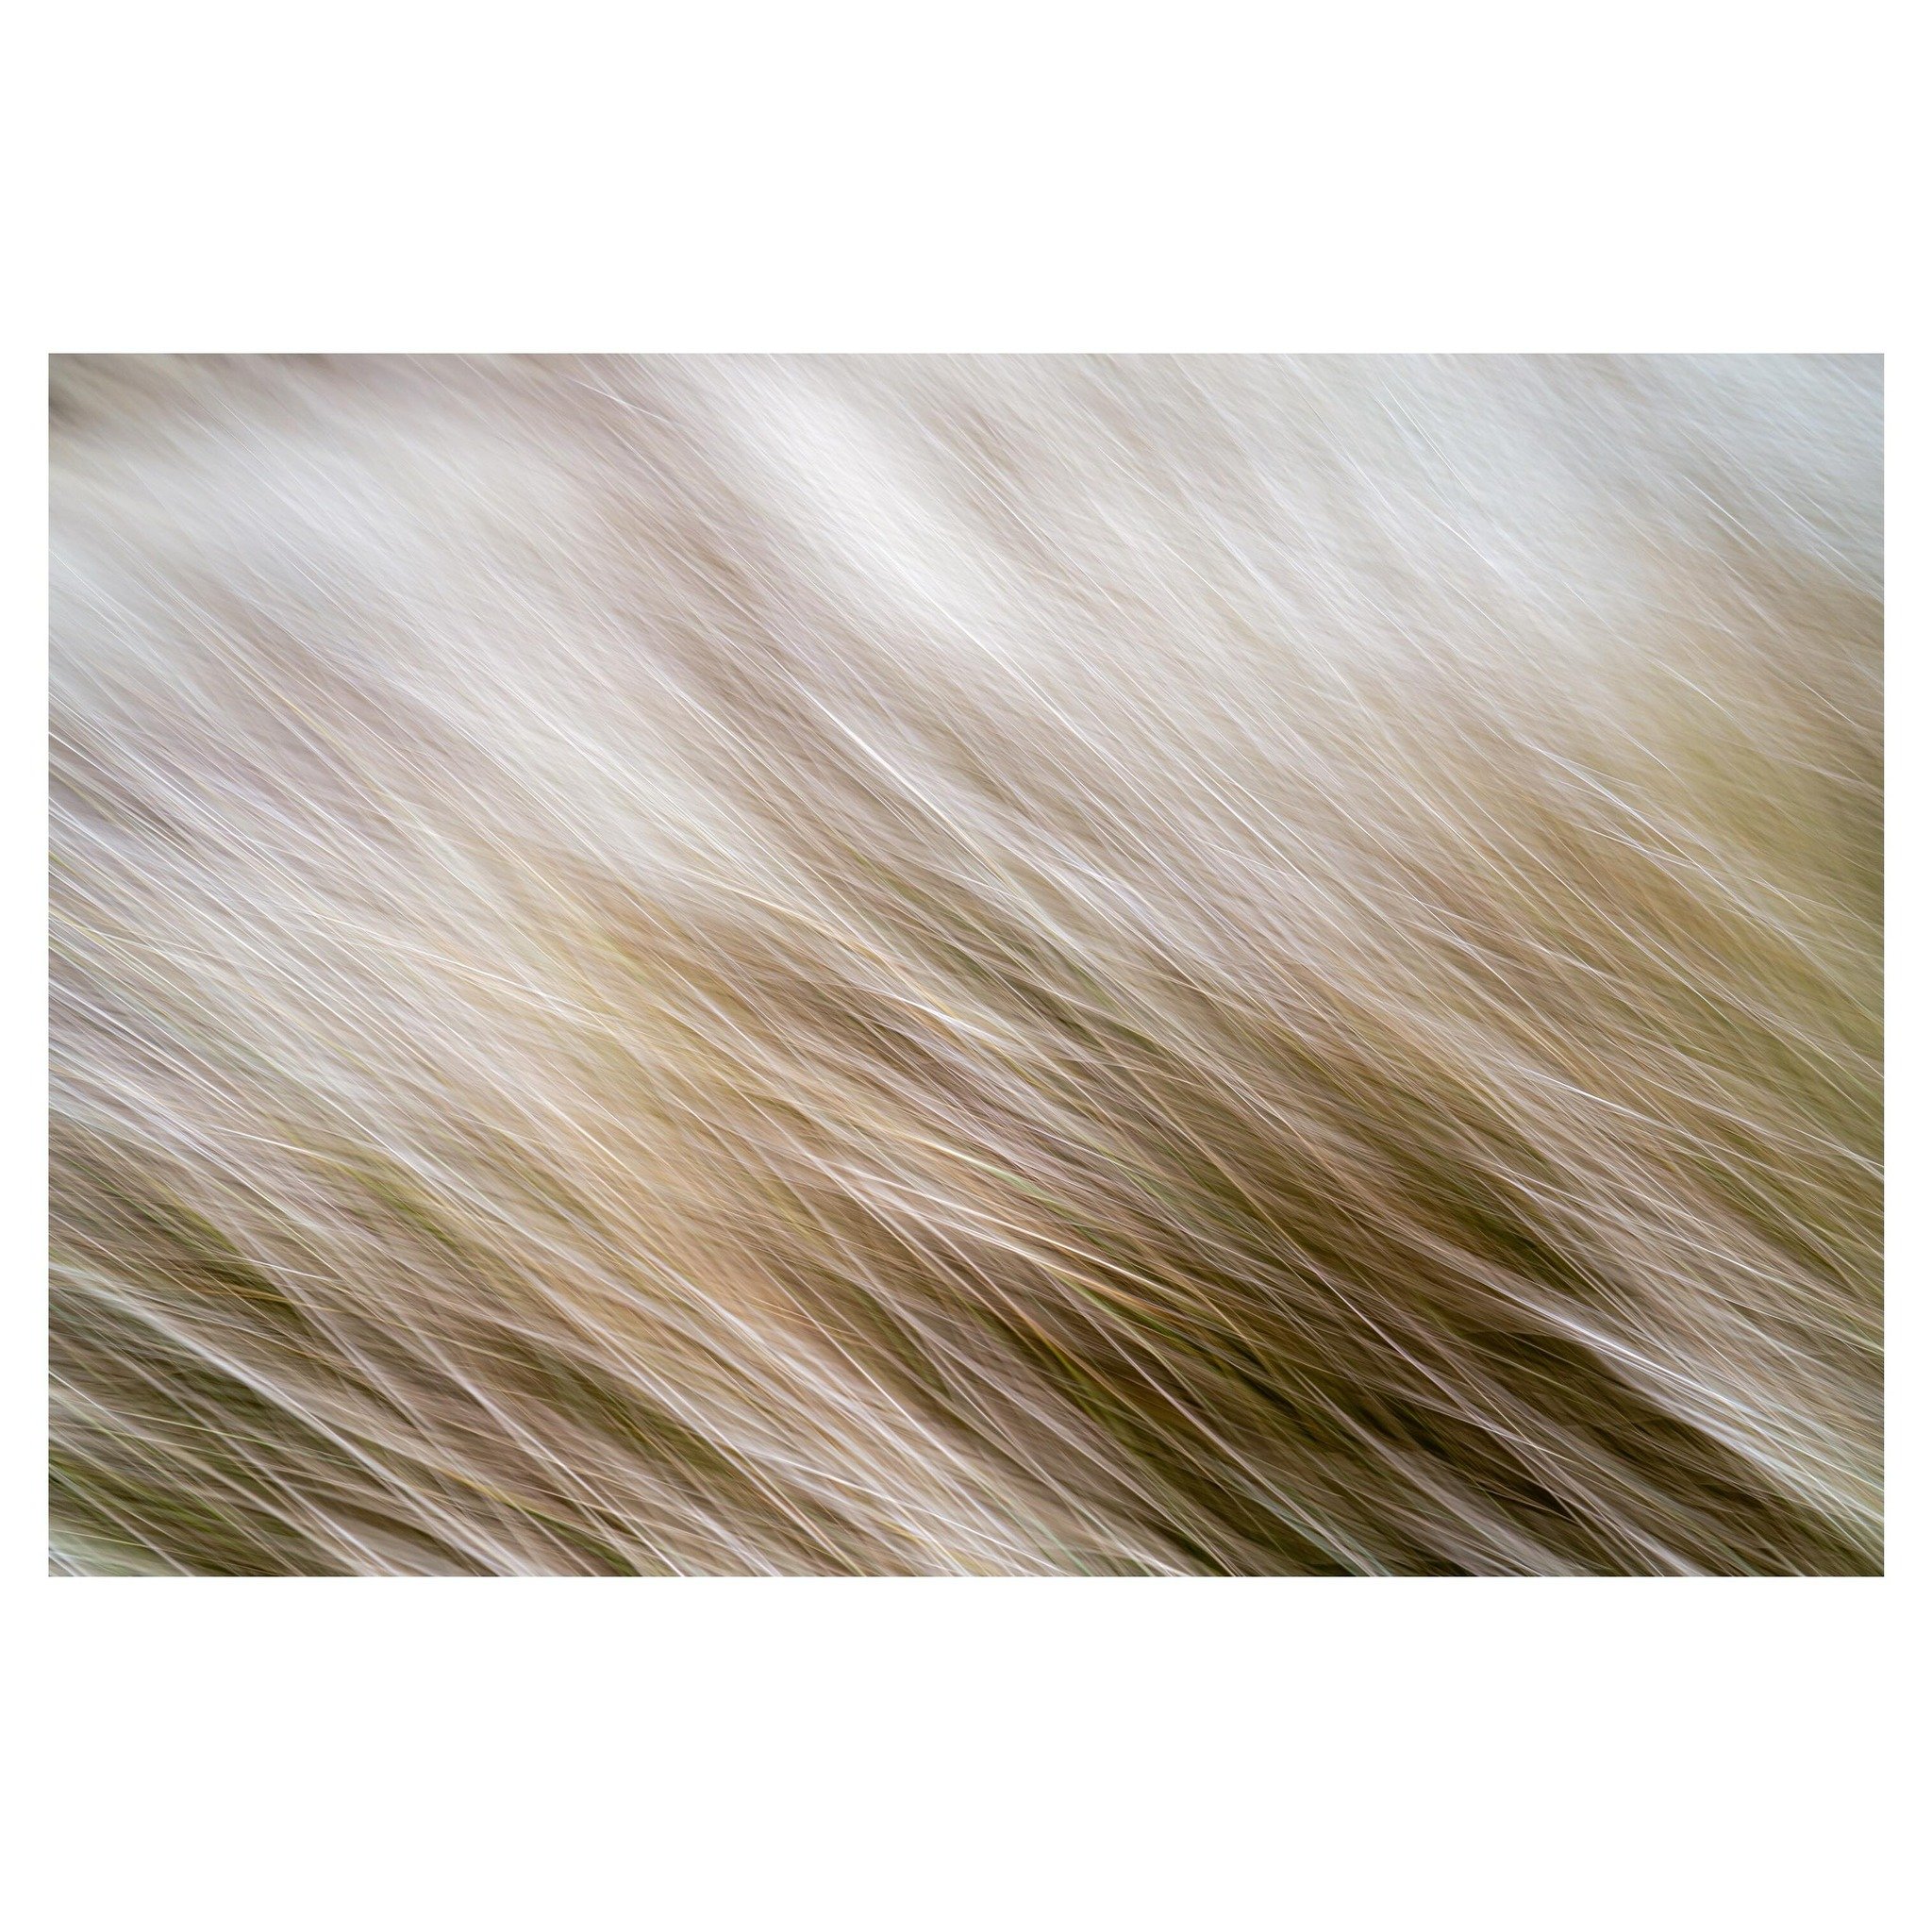 Marram grasses 
.
.
.
.
.
#dunes #marramgrasses #coastal #coastalphotography landscapephotography #coloursofnature #icm #icm_community #icmphotography #abstractphotography #fineartphotography #elementsphotomag #framesmag #minimal #outdoorphotographym